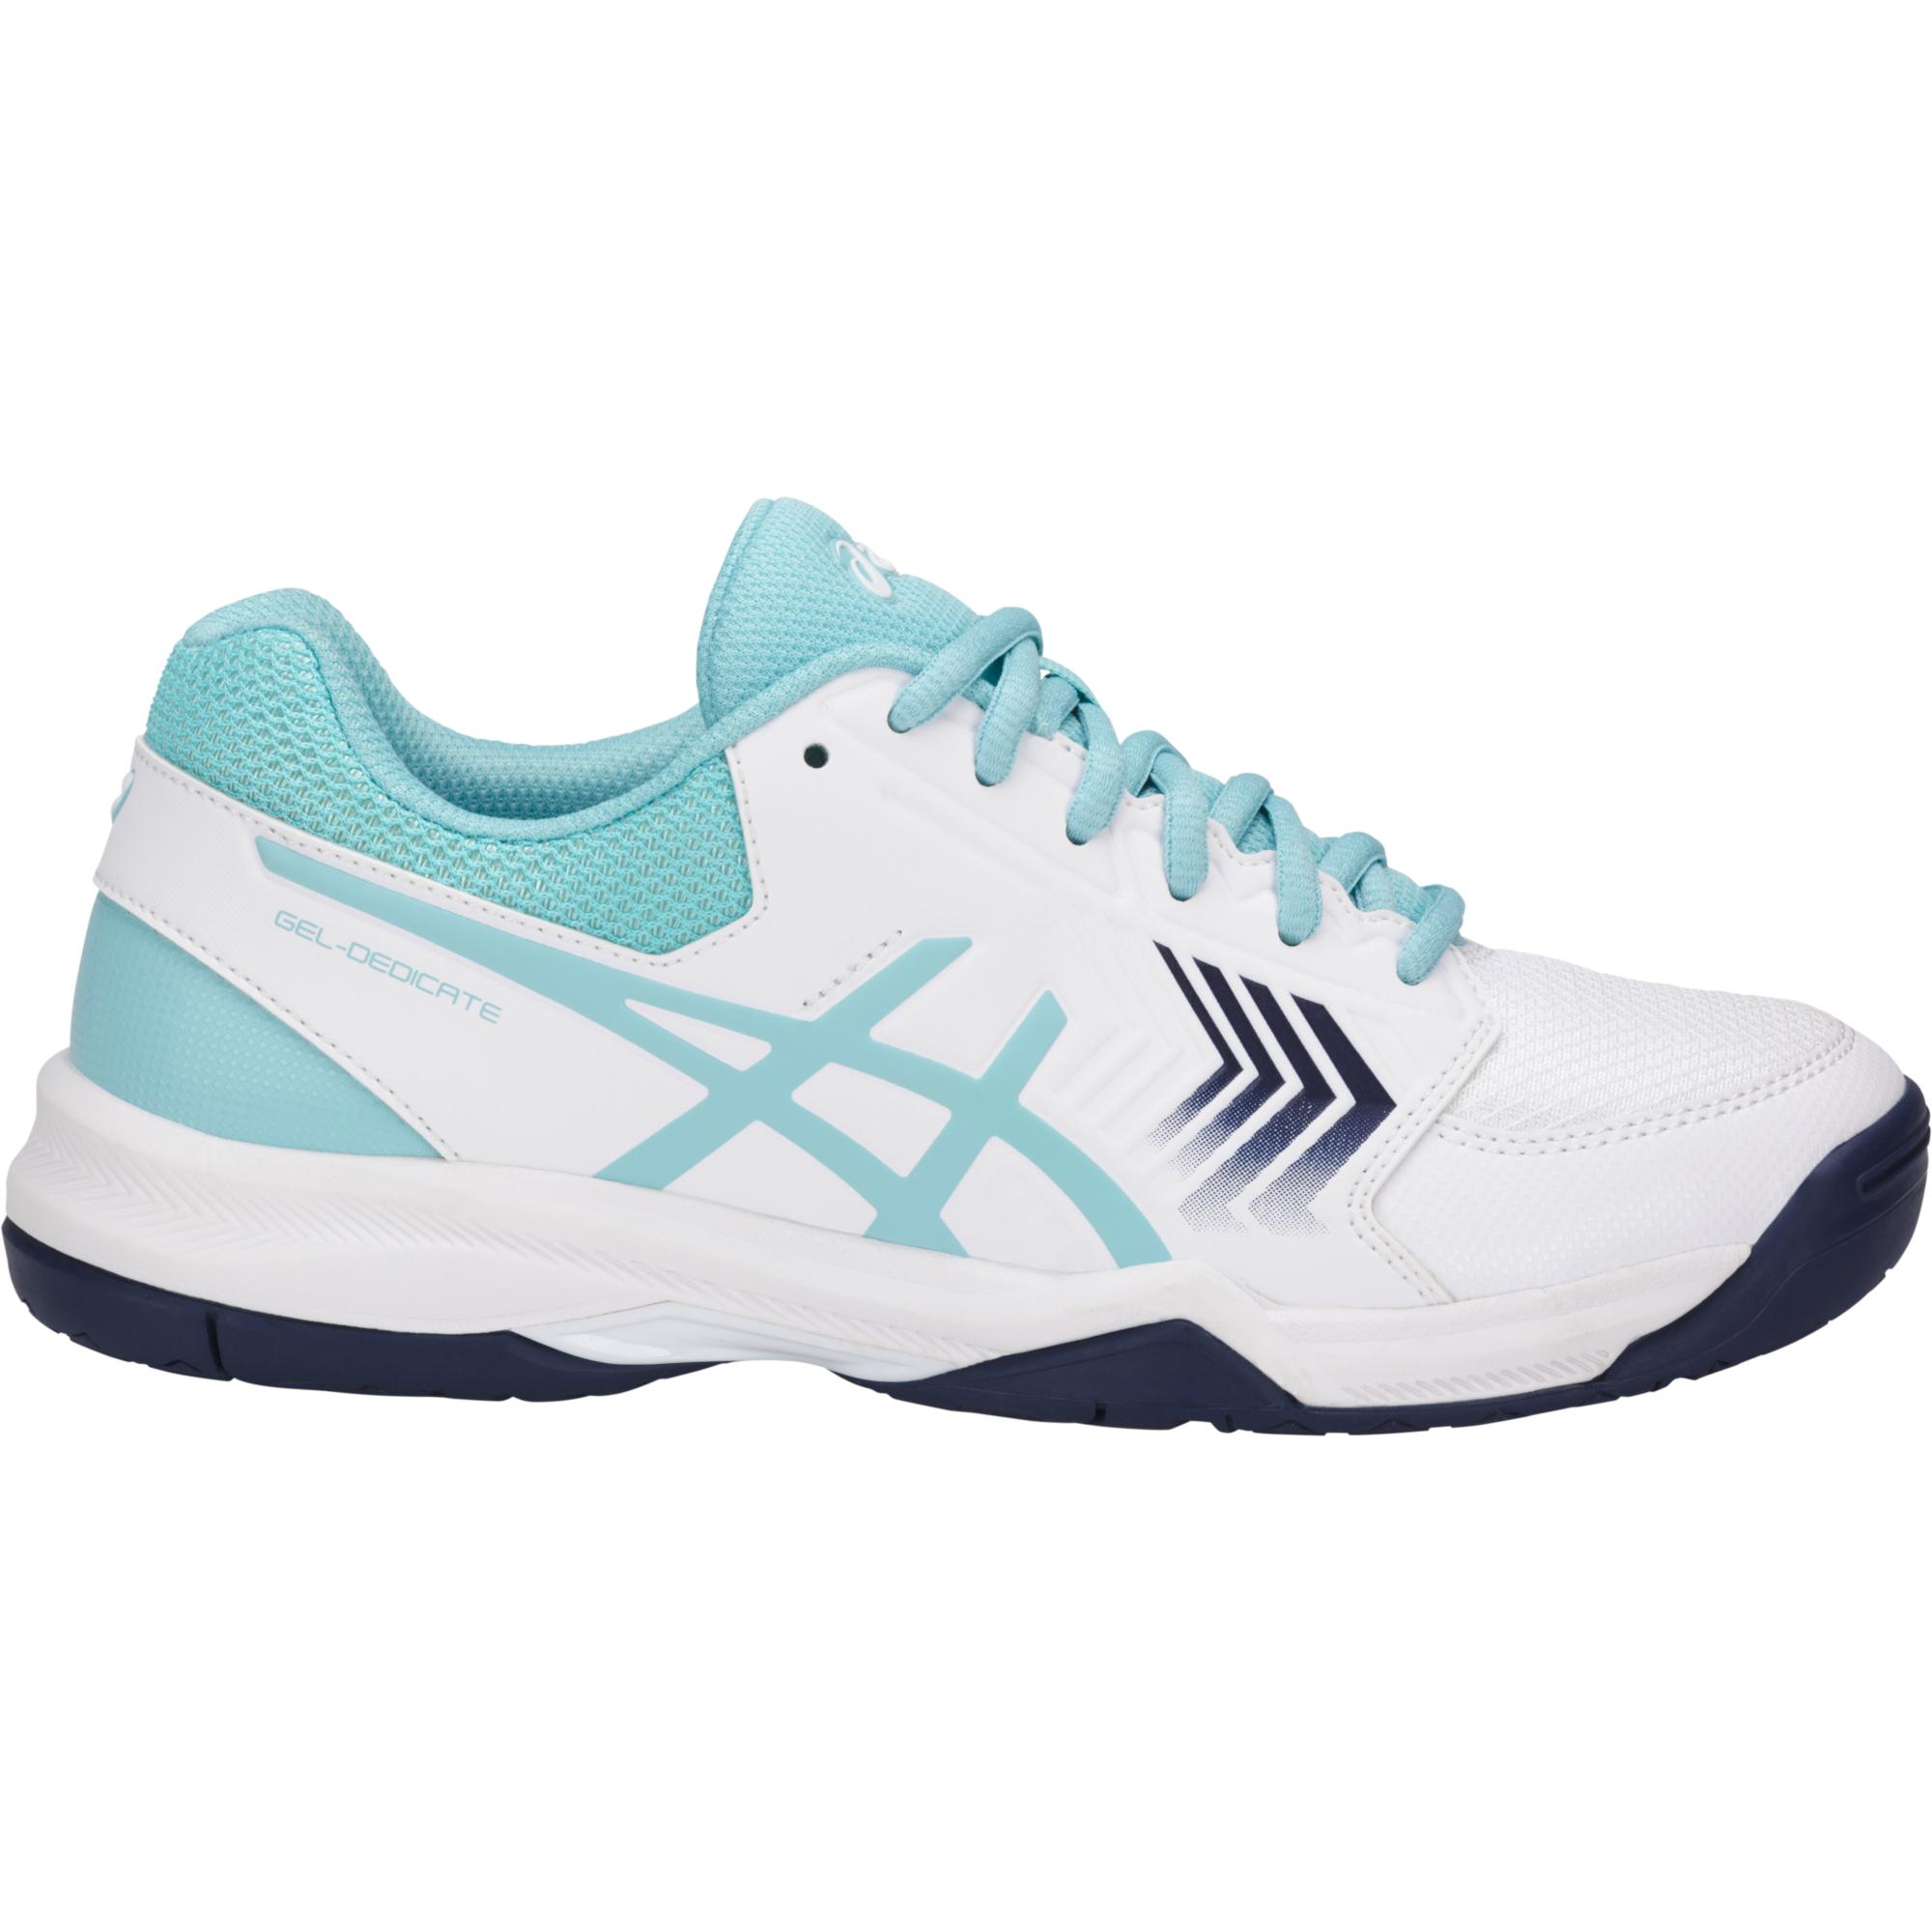 Asics Womens GEL-Dedicate 5 Tennis Shoes - White/Porcelain Blue - 0